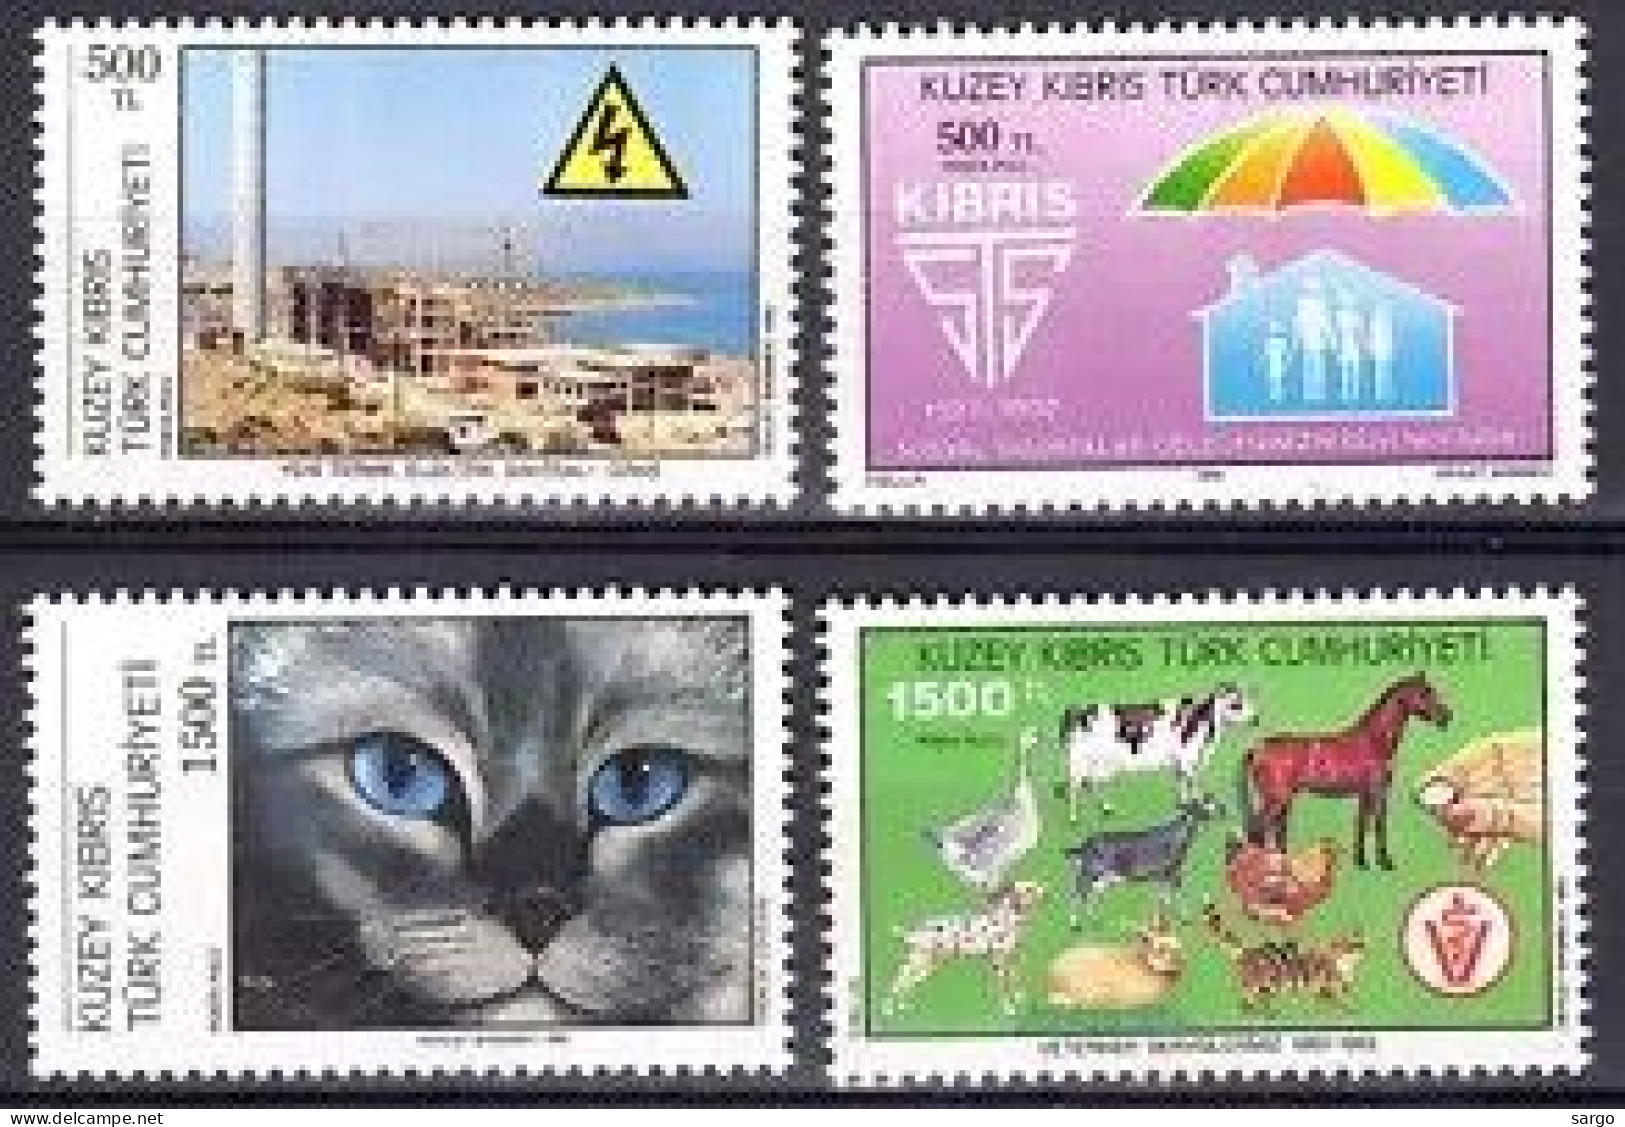 TURKISH CYPRUS -  1992  - FAUNA - ANIMALS -  CAT - FARM - ANNIVERSARIES AND EVENTS - 4  V - MNH - - Chats Domestiques